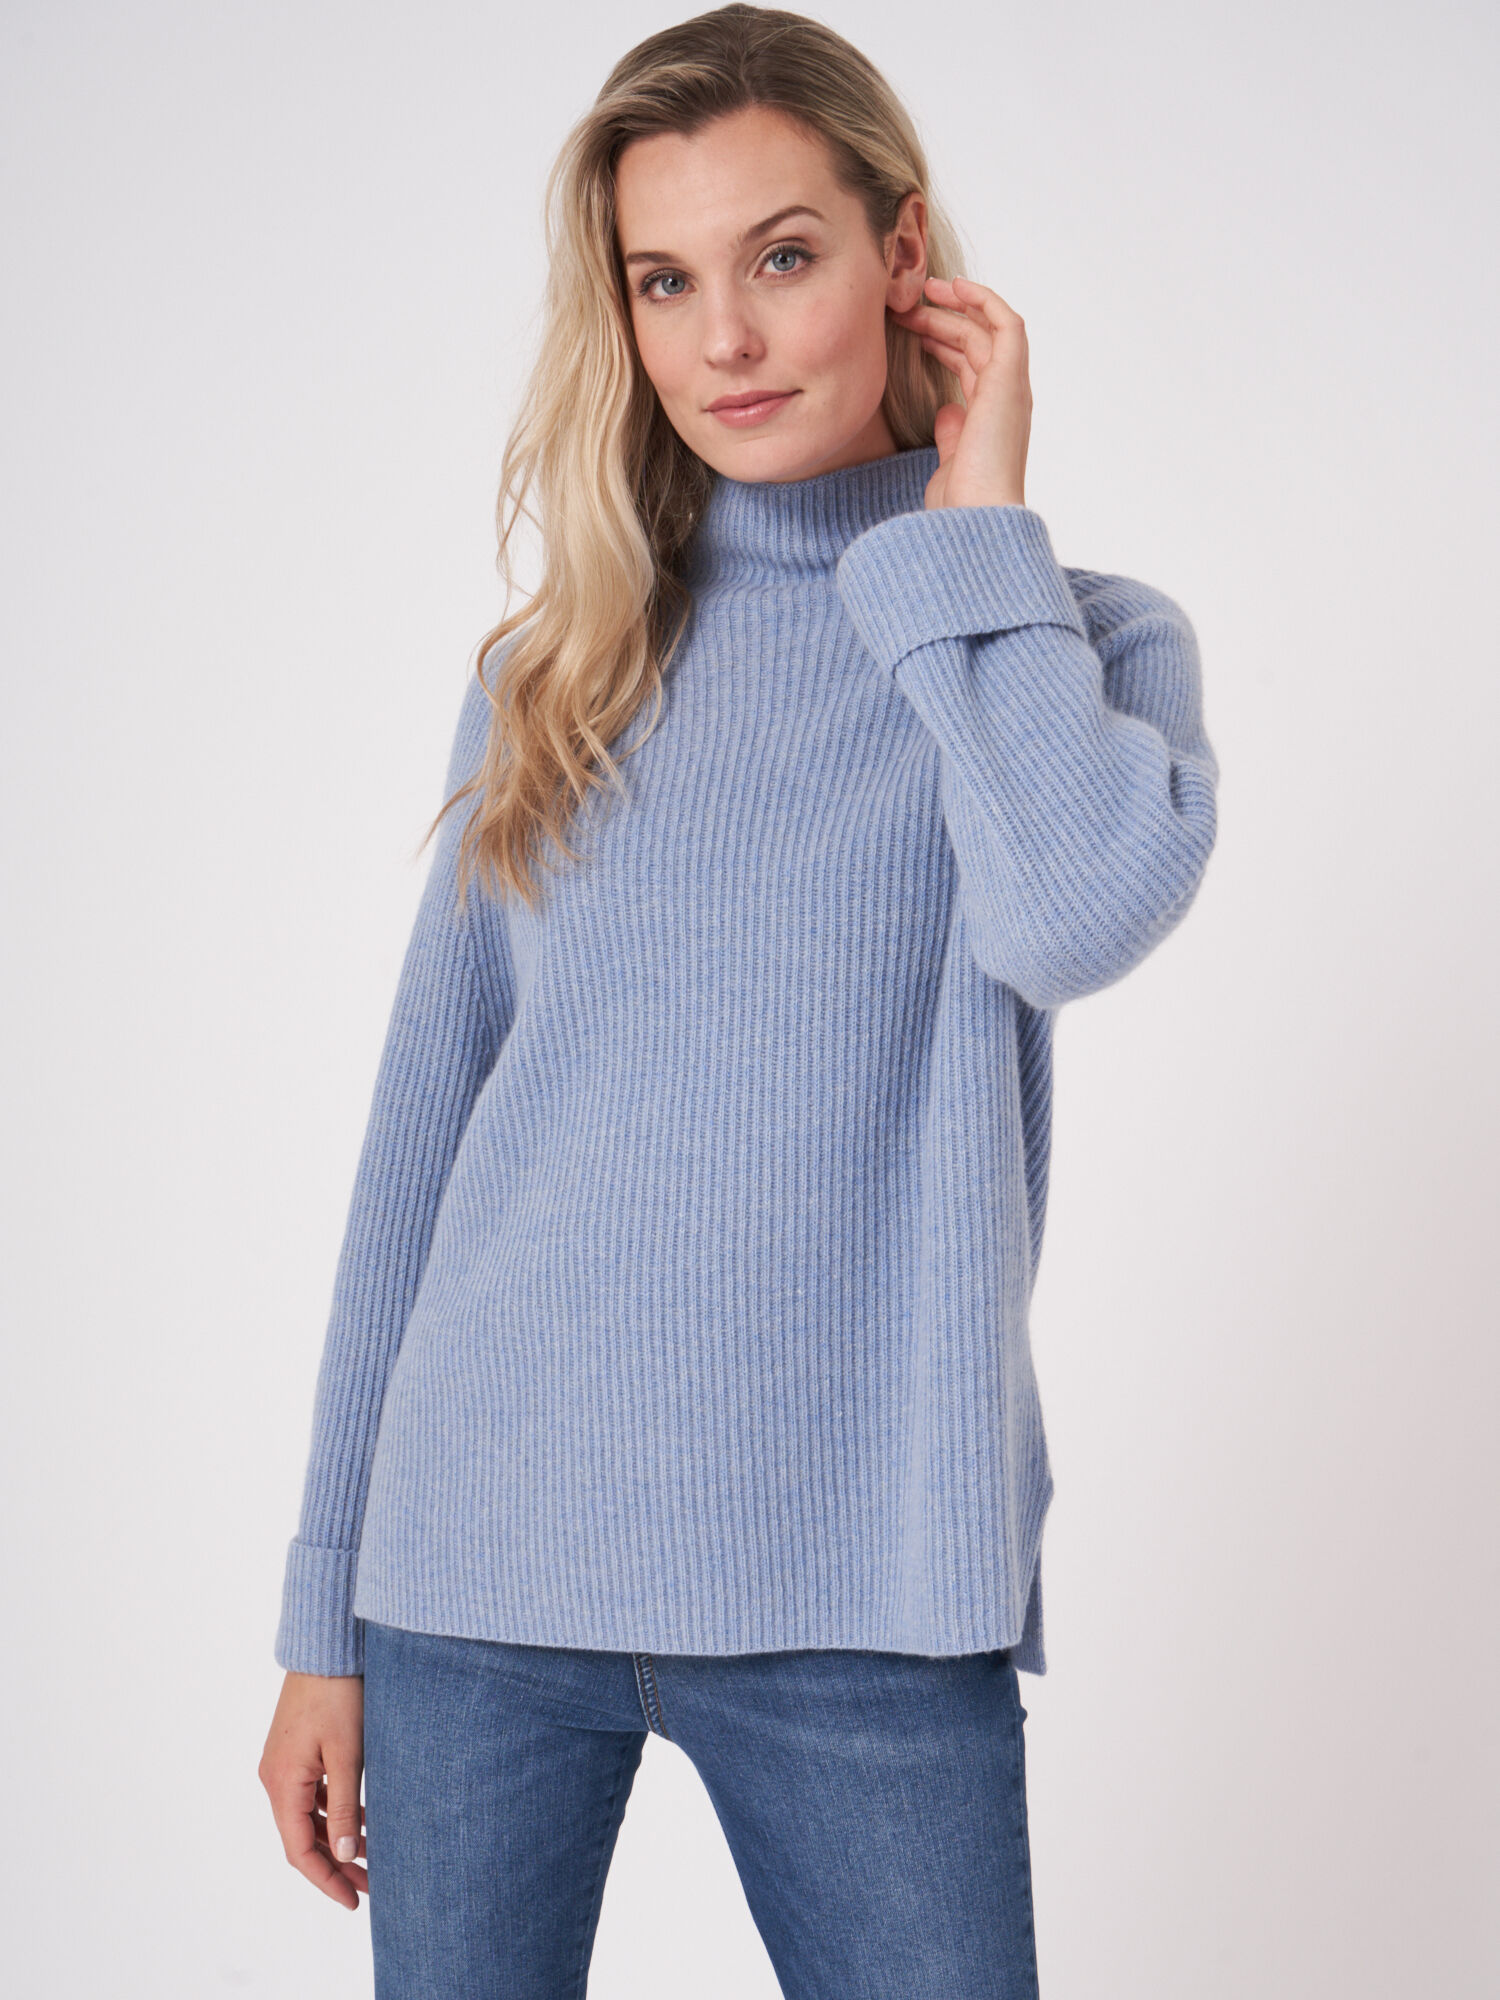 Oversized lambswool sweater with raglan sleeves